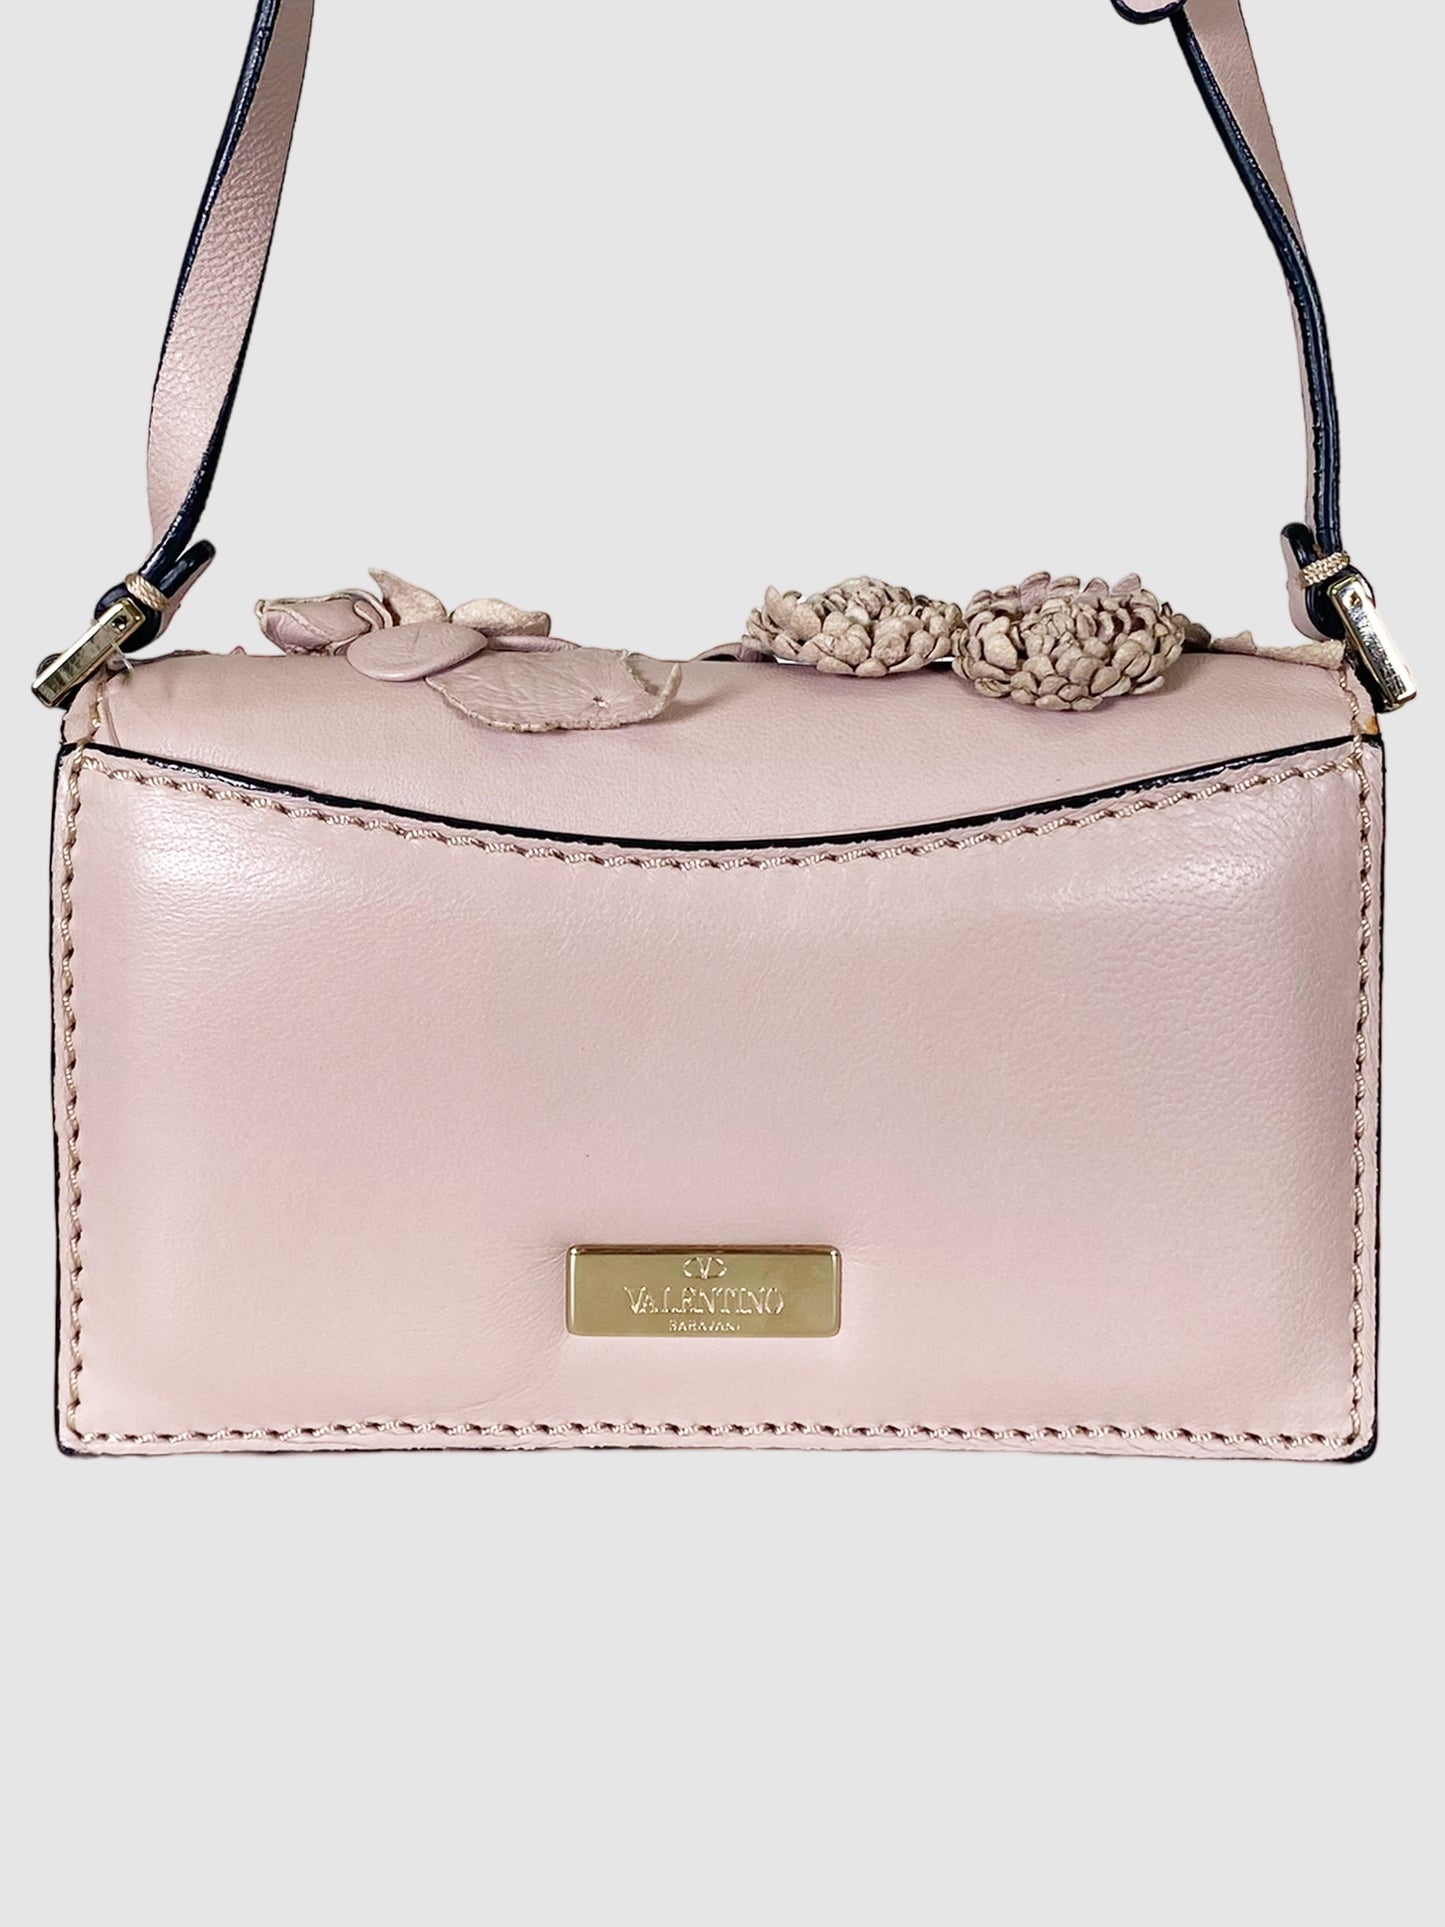 Valentino Leather Floral Mini Crossbody Bag